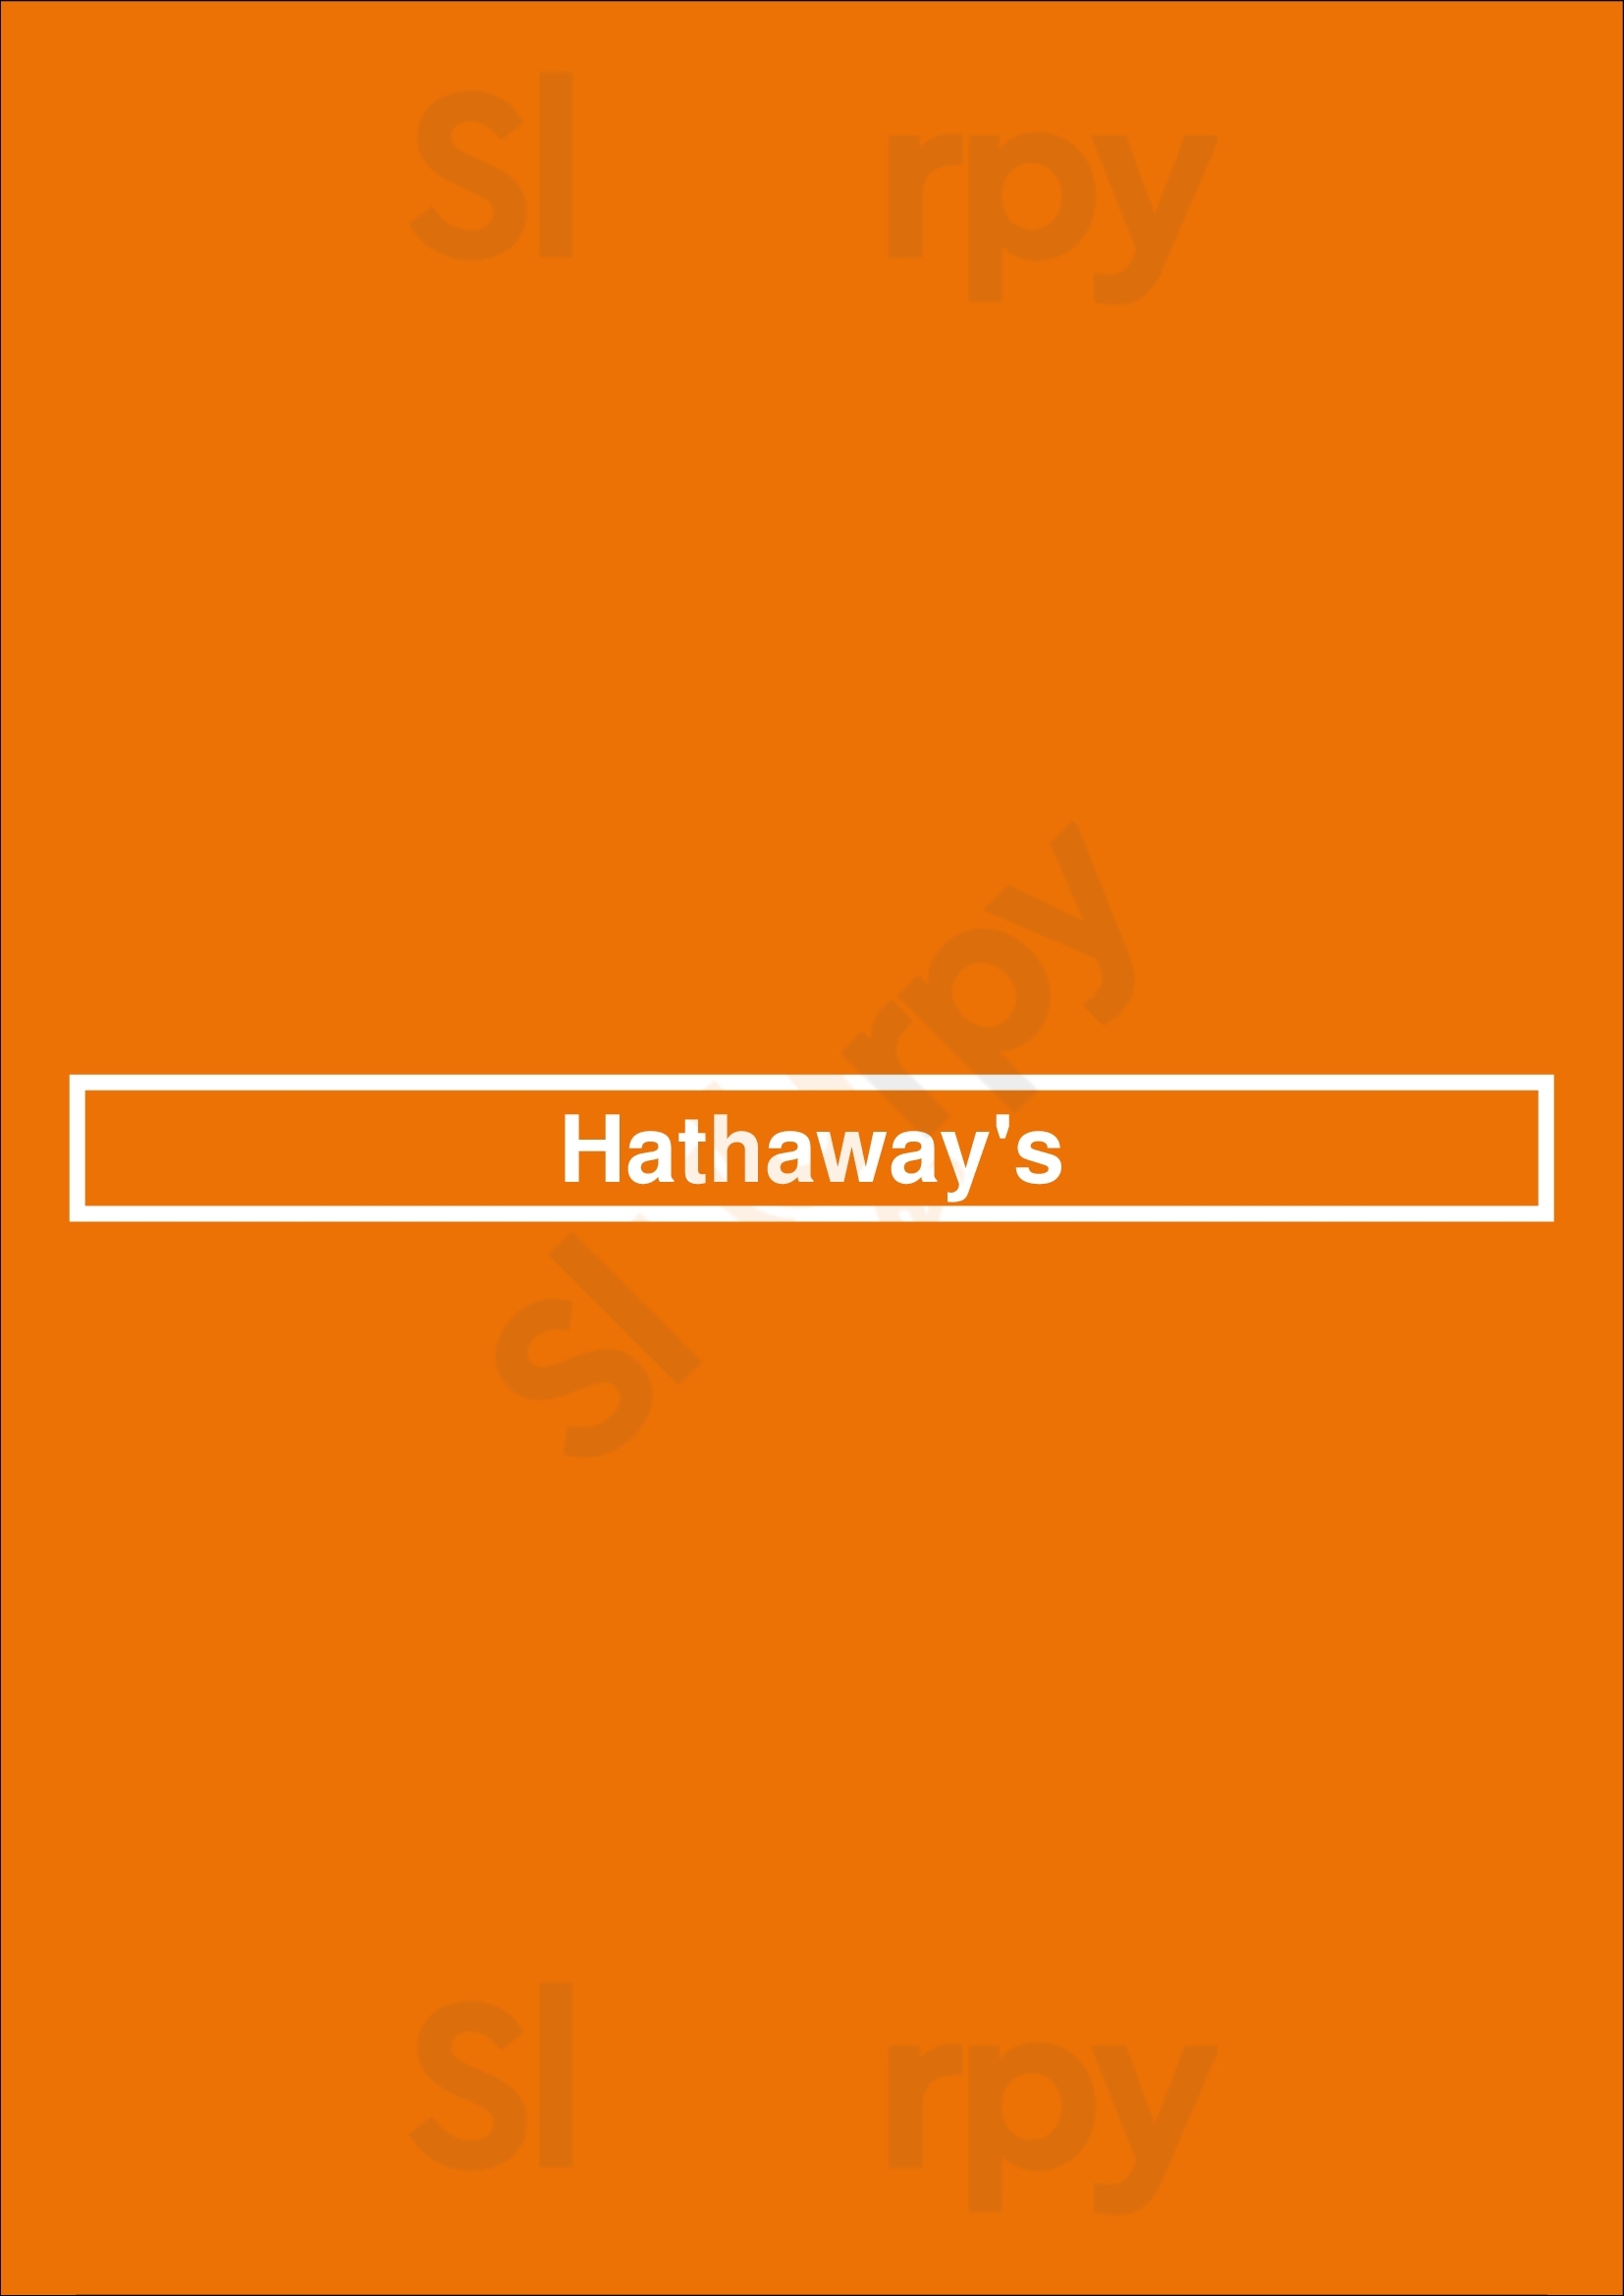 Hathaway's Diner Cincinnati Menu - 1